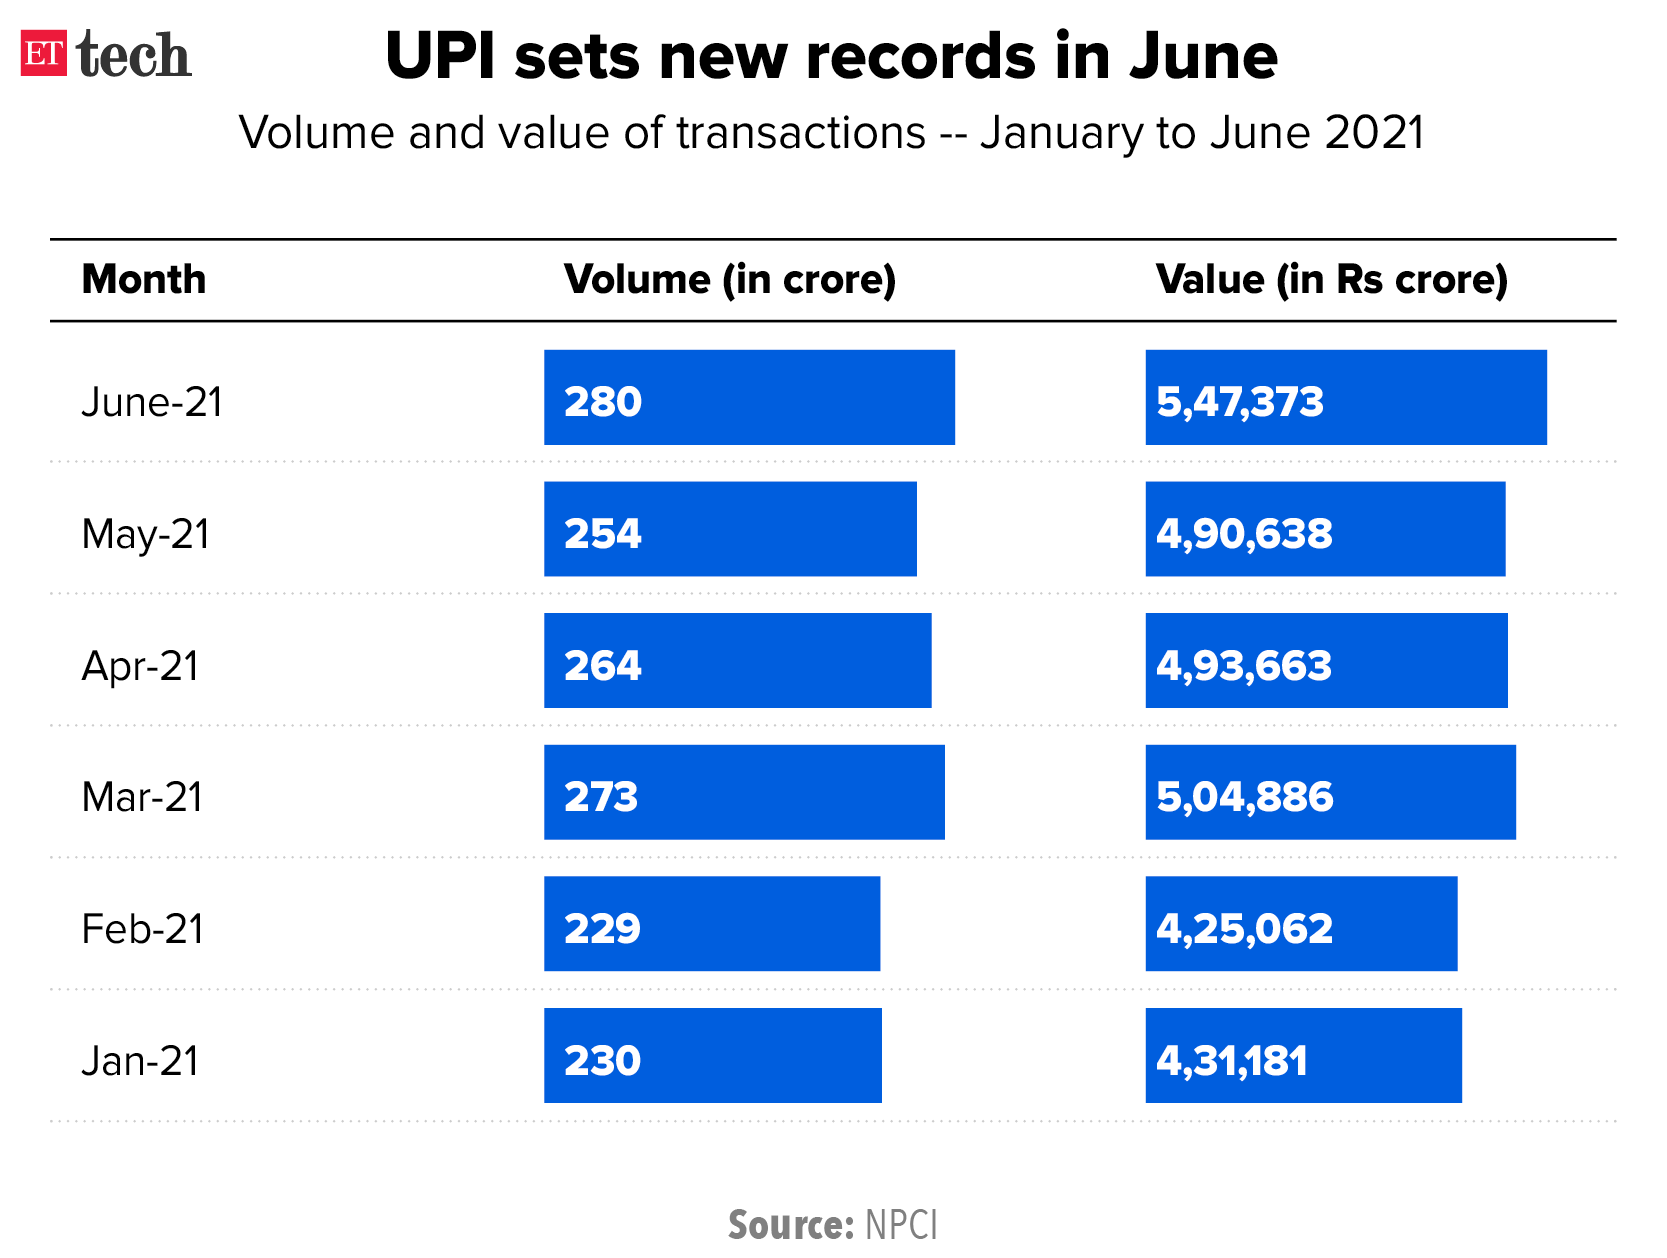 UPI sets new records in June